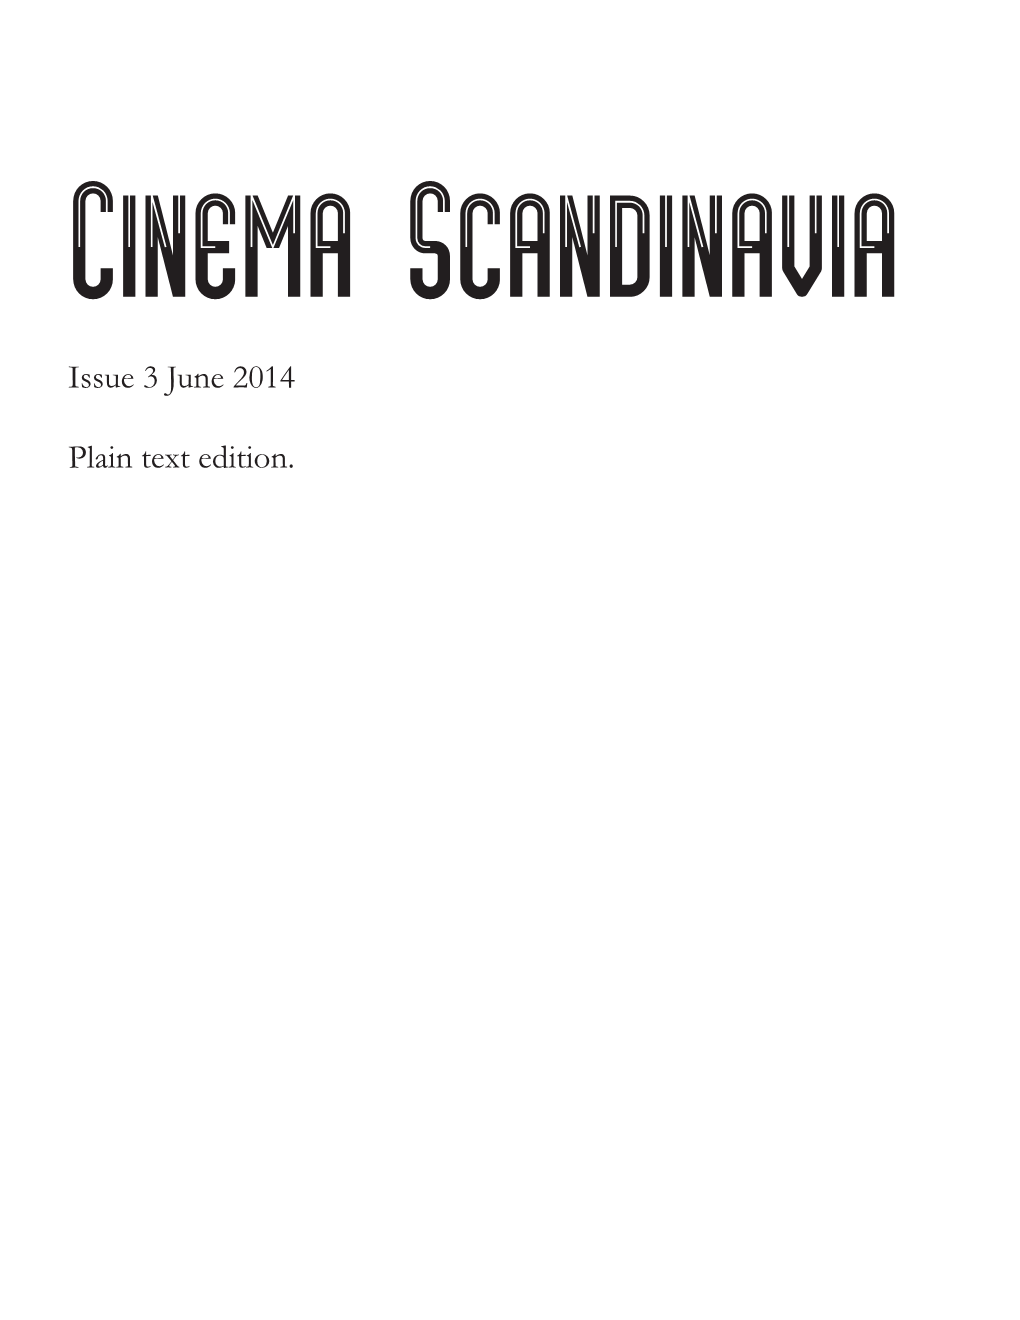 Cinema Scandinavia Issue 3 Plain Text